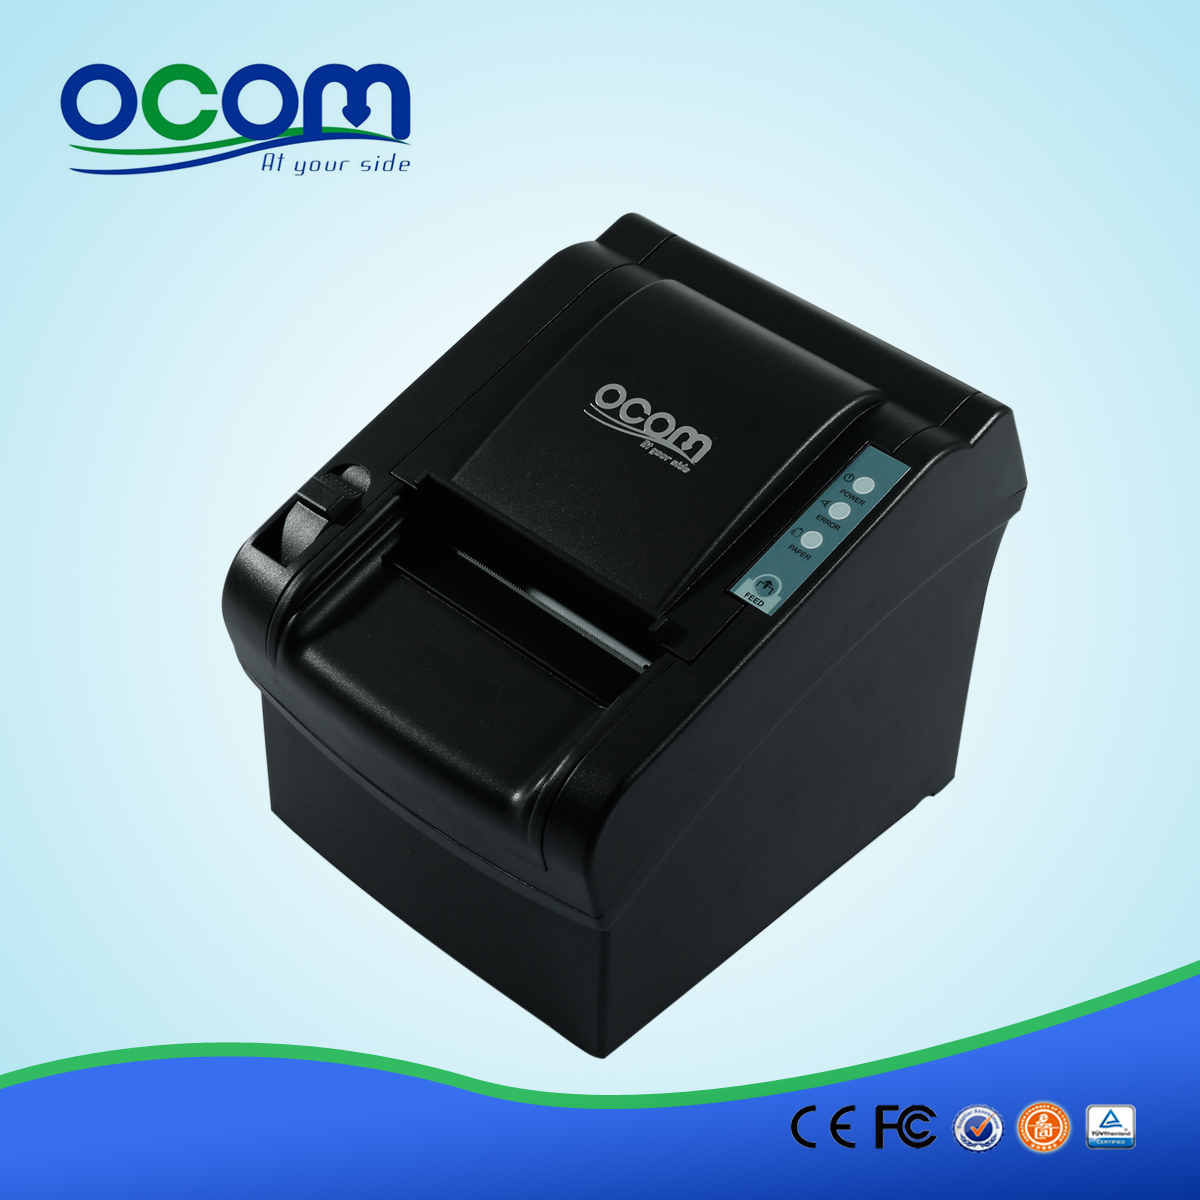 80mm Manual Cutter Thermal Receipt Printer - OCPP-802